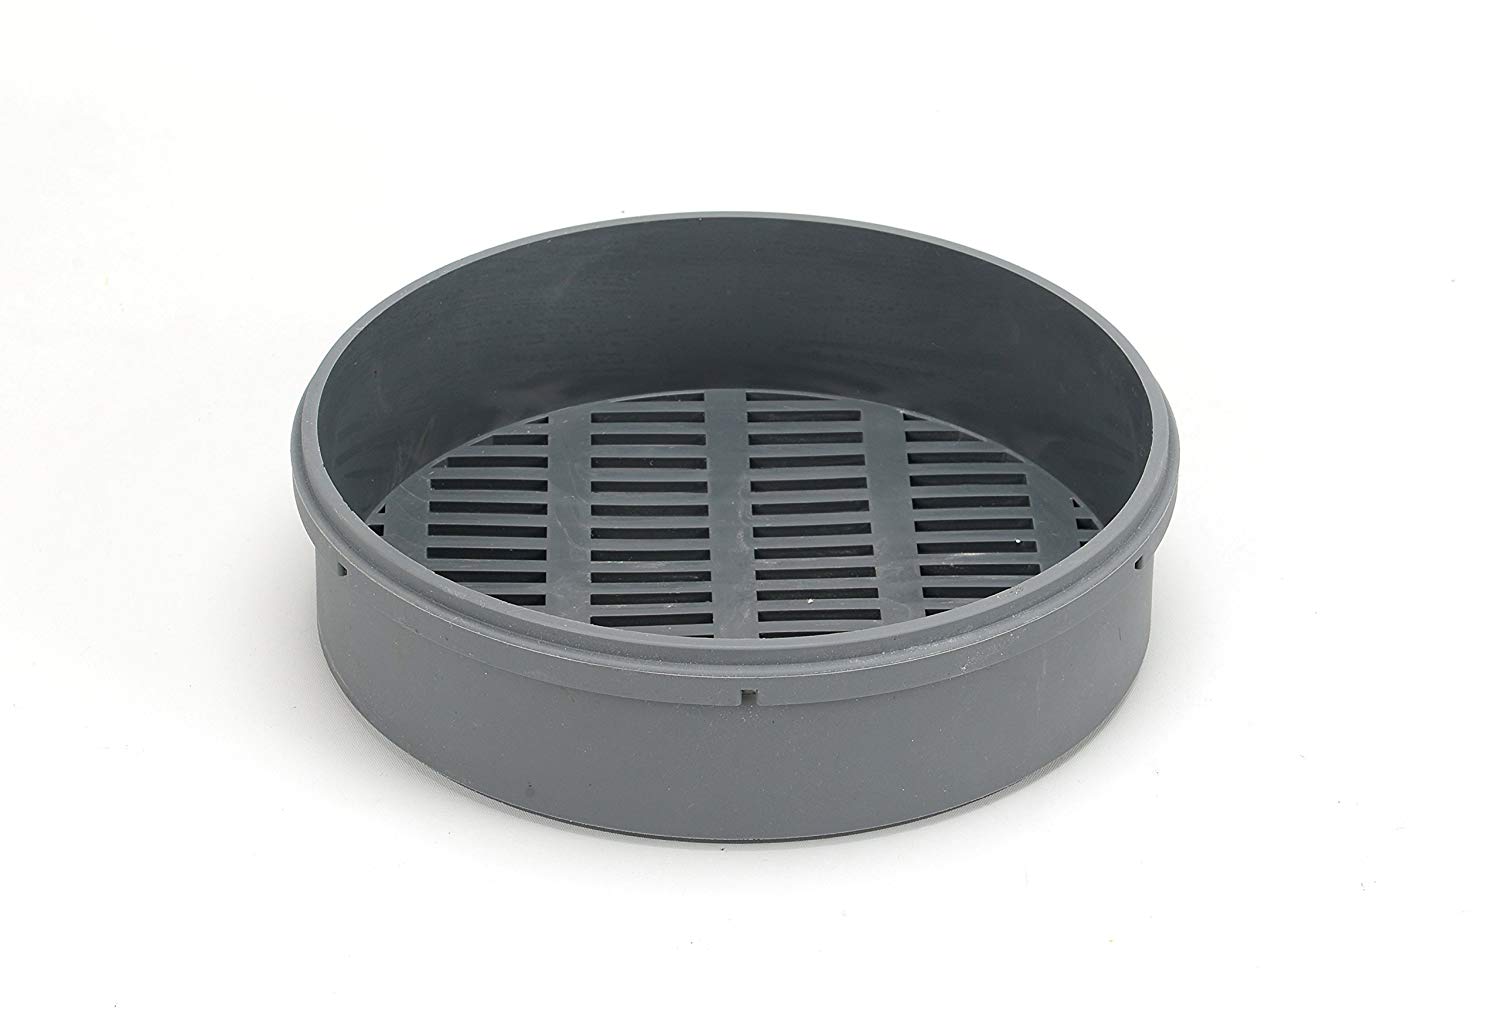 Instant Pot silicone steamer basket